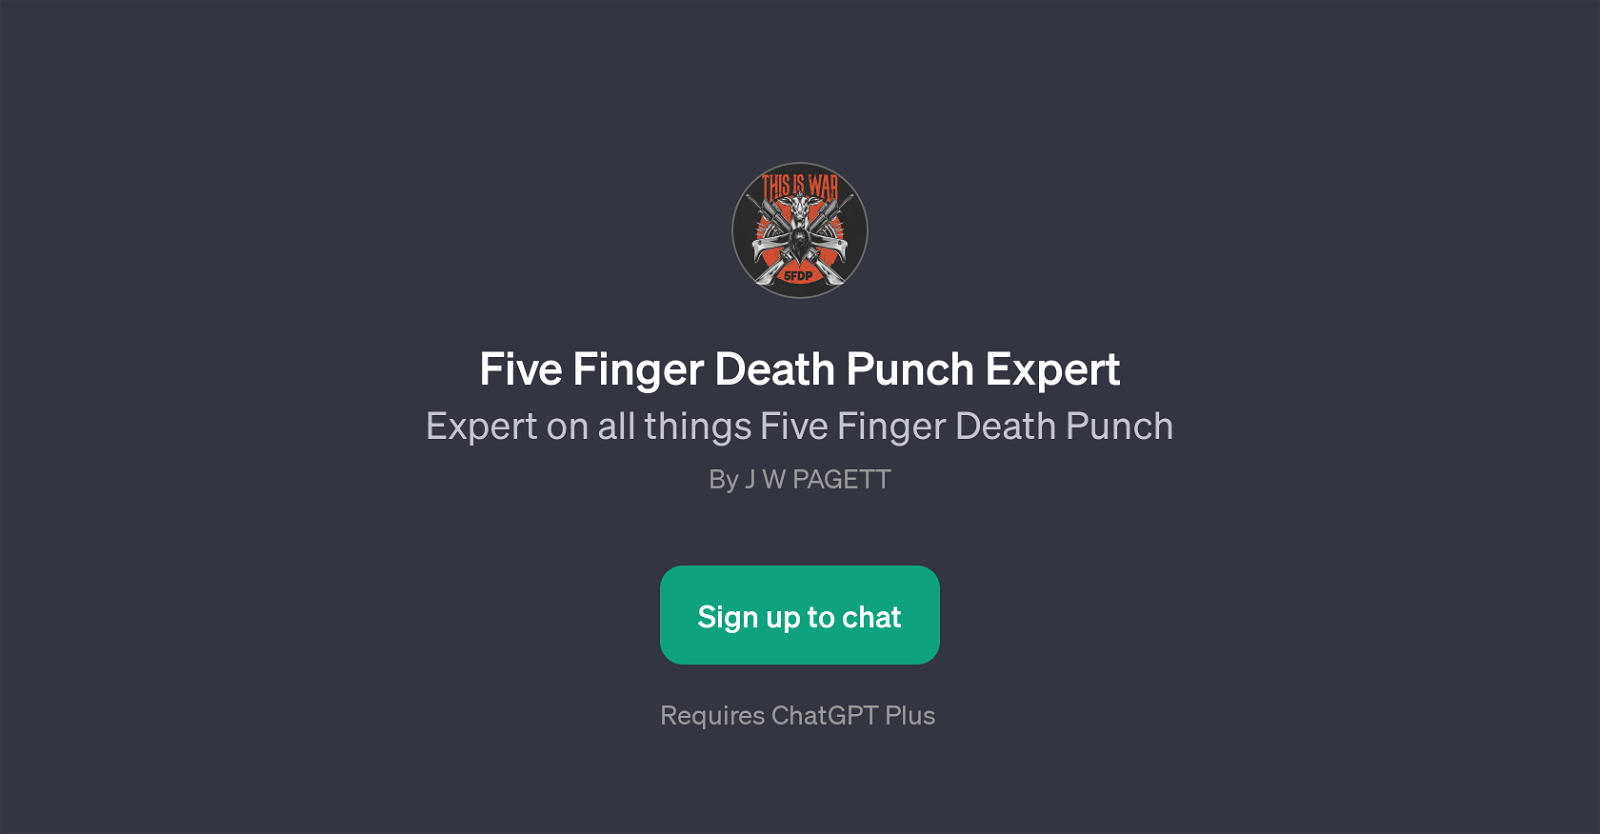 Five Finger Death Punch Expert website